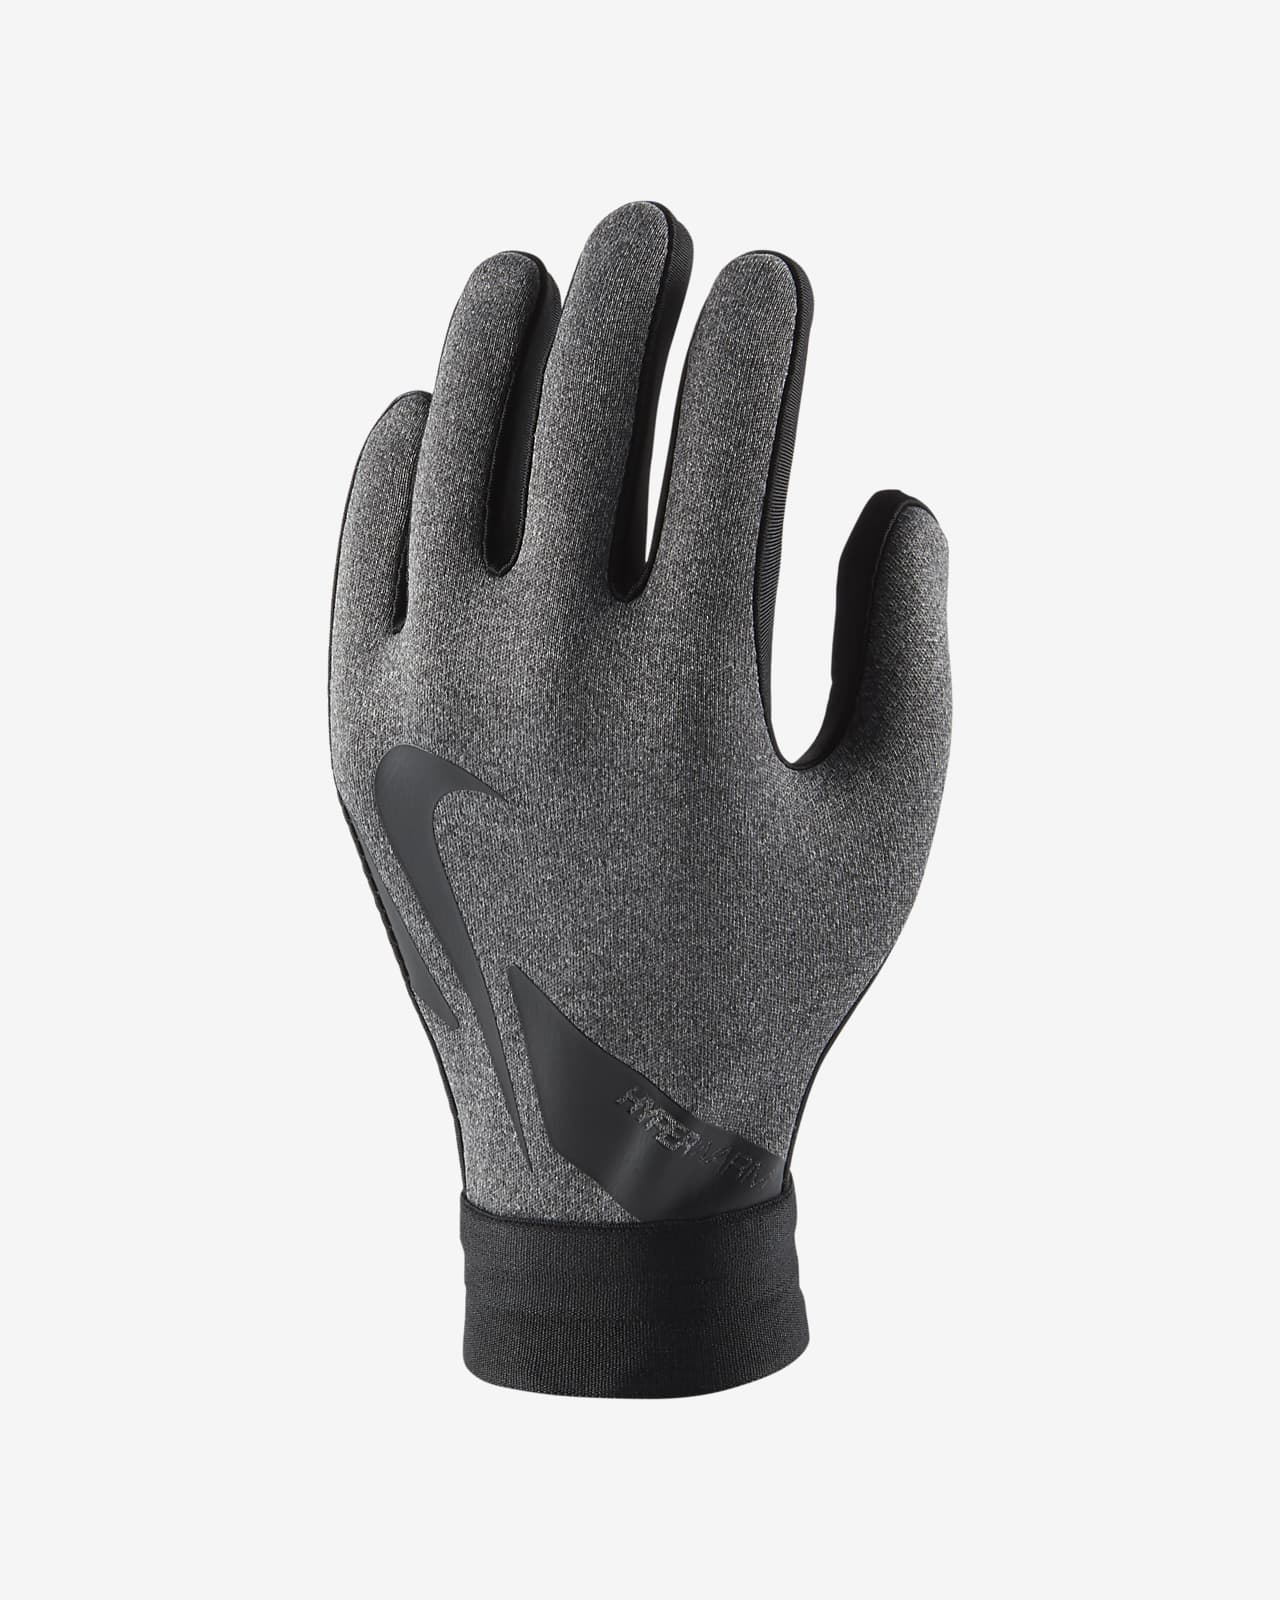 provincie compleet Hou op nike hyperwarm gloves junior, Off 66%, www.iusarecords.com